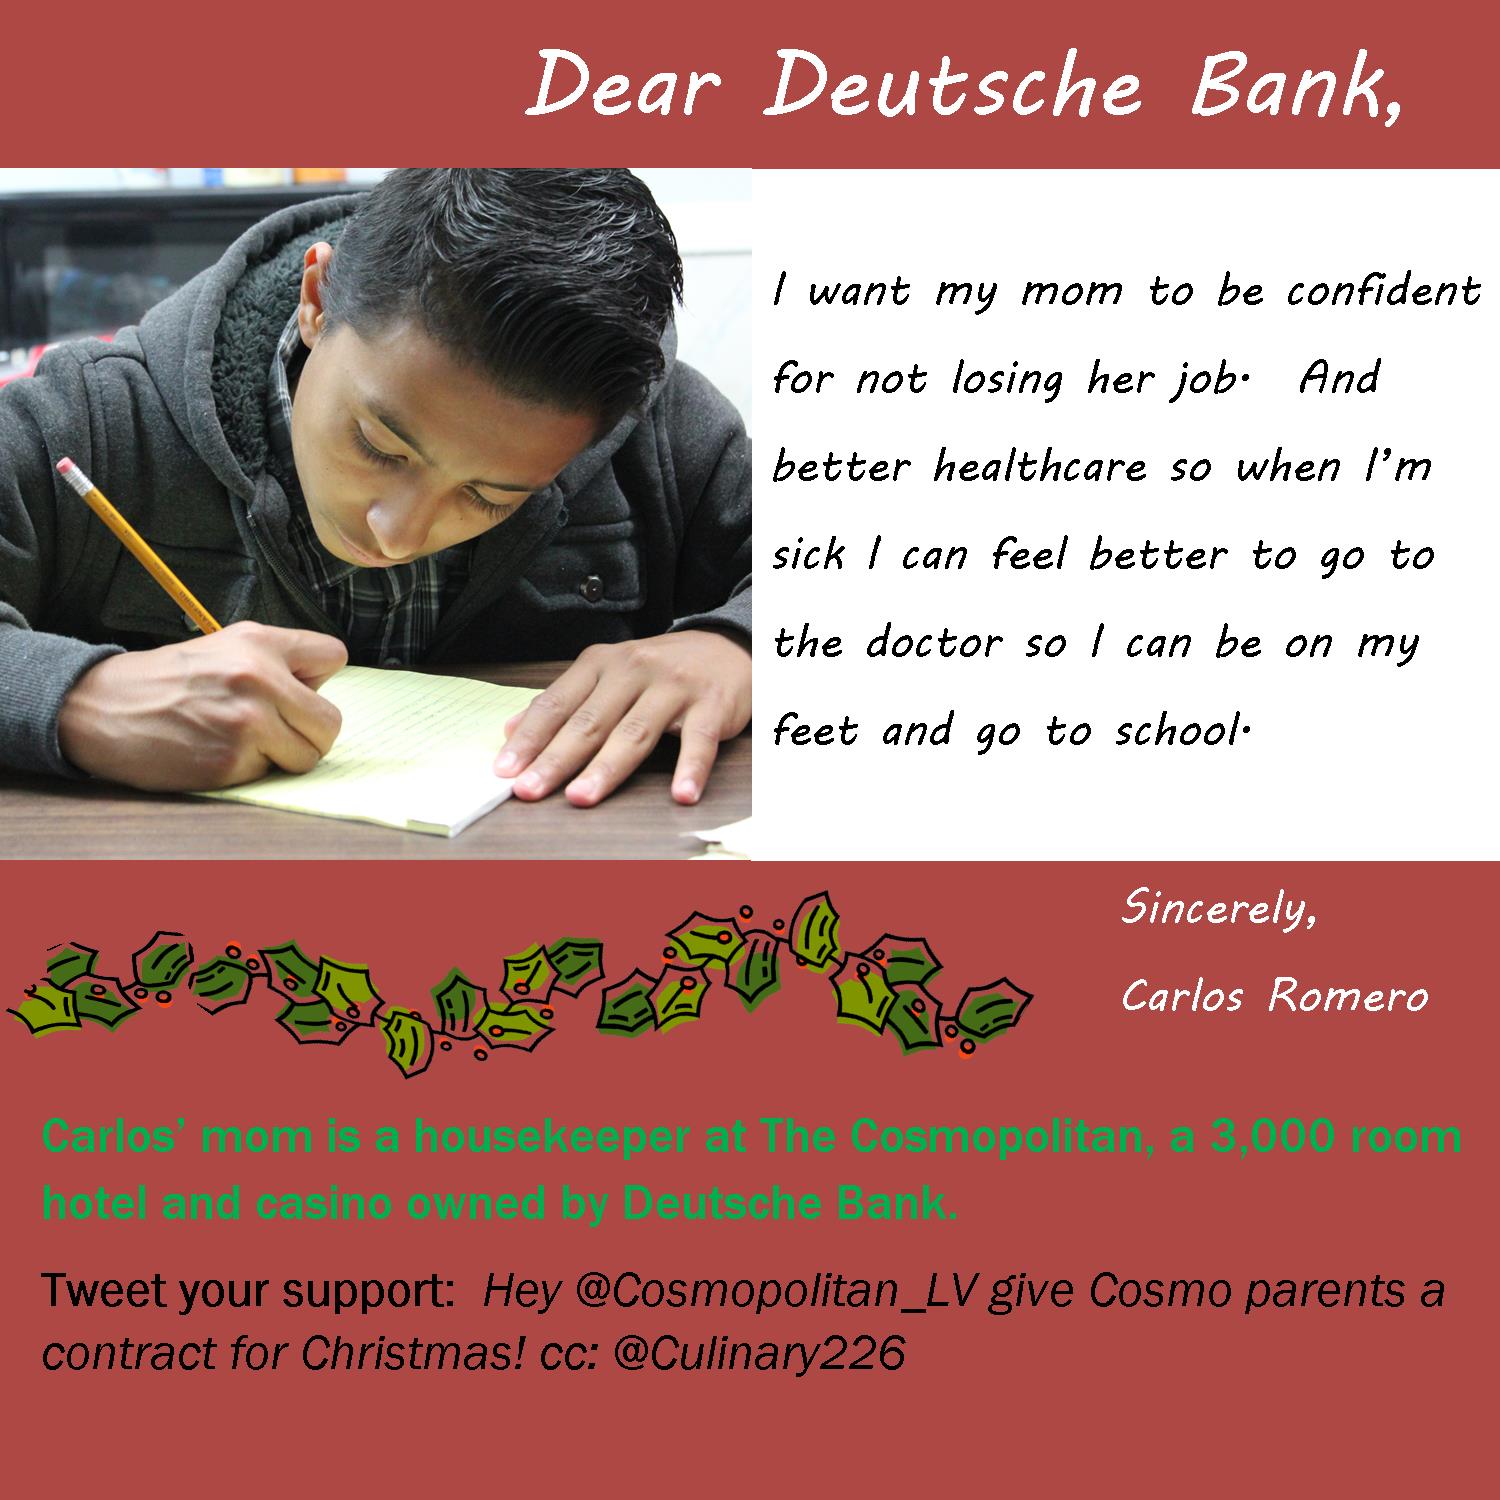 Dear Deutsche Bank